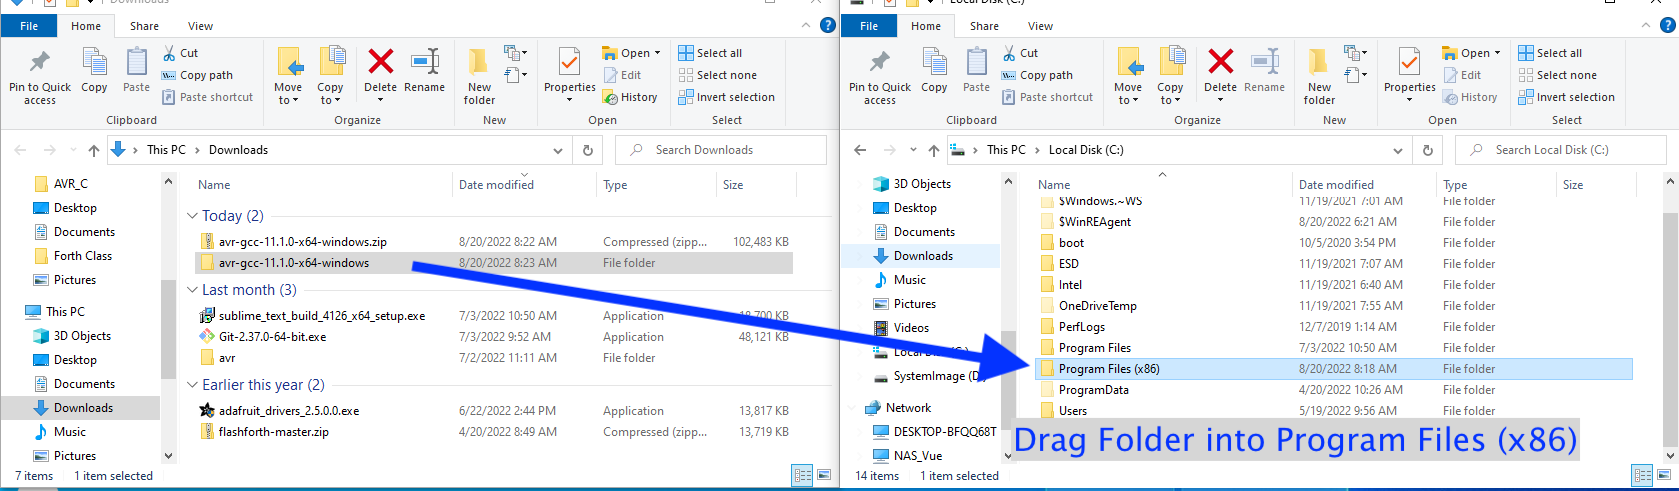 Drag Folder into Program Files(x86)